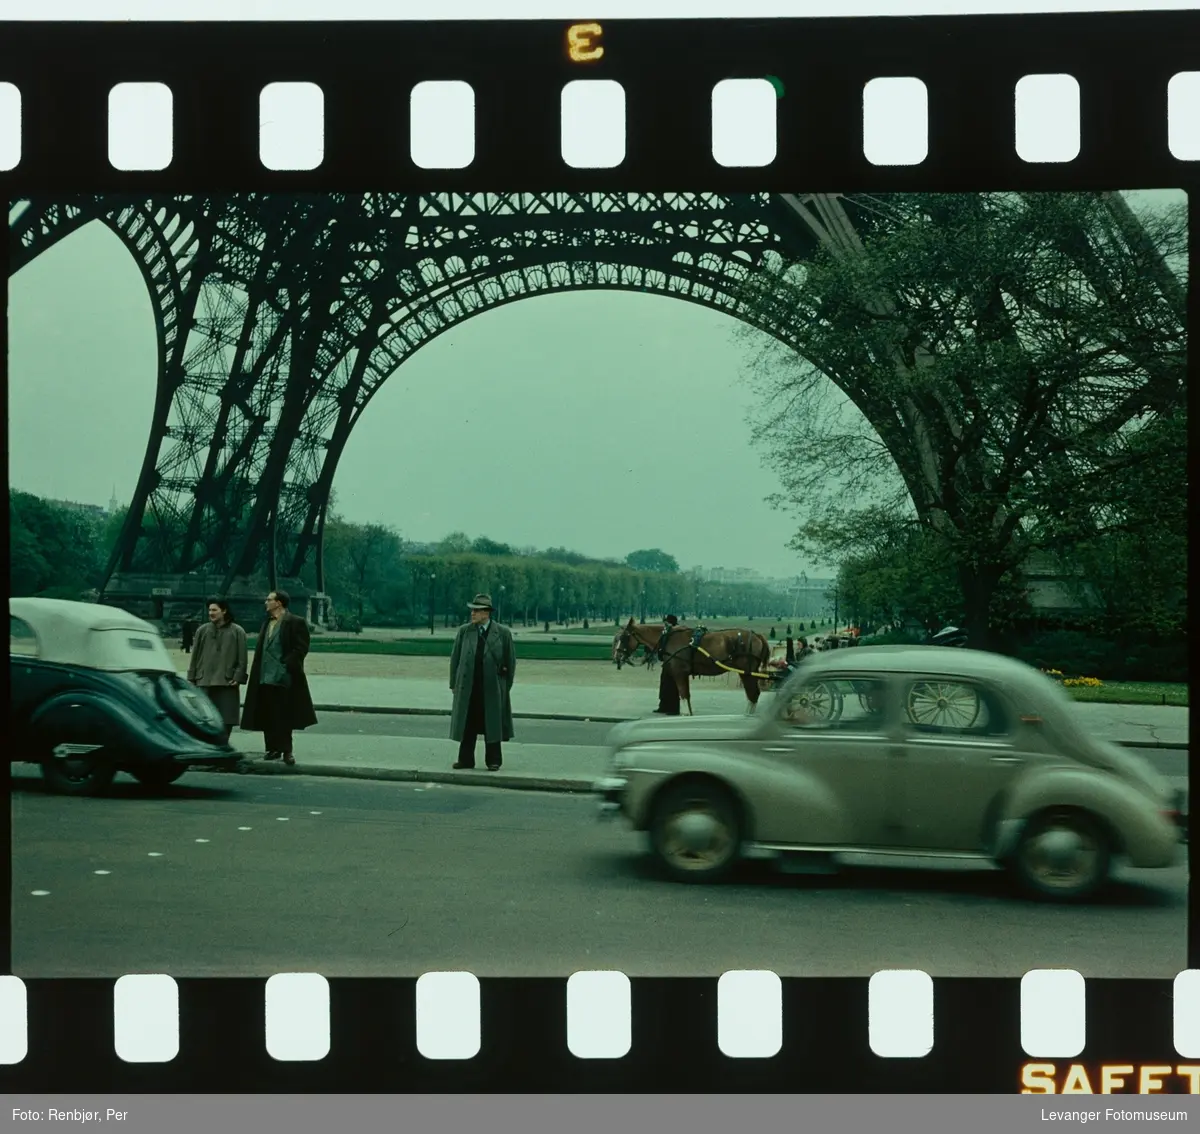 Fra Paris, Eiffeltårnet. til høyre ser vi en bil type renault 4 cv